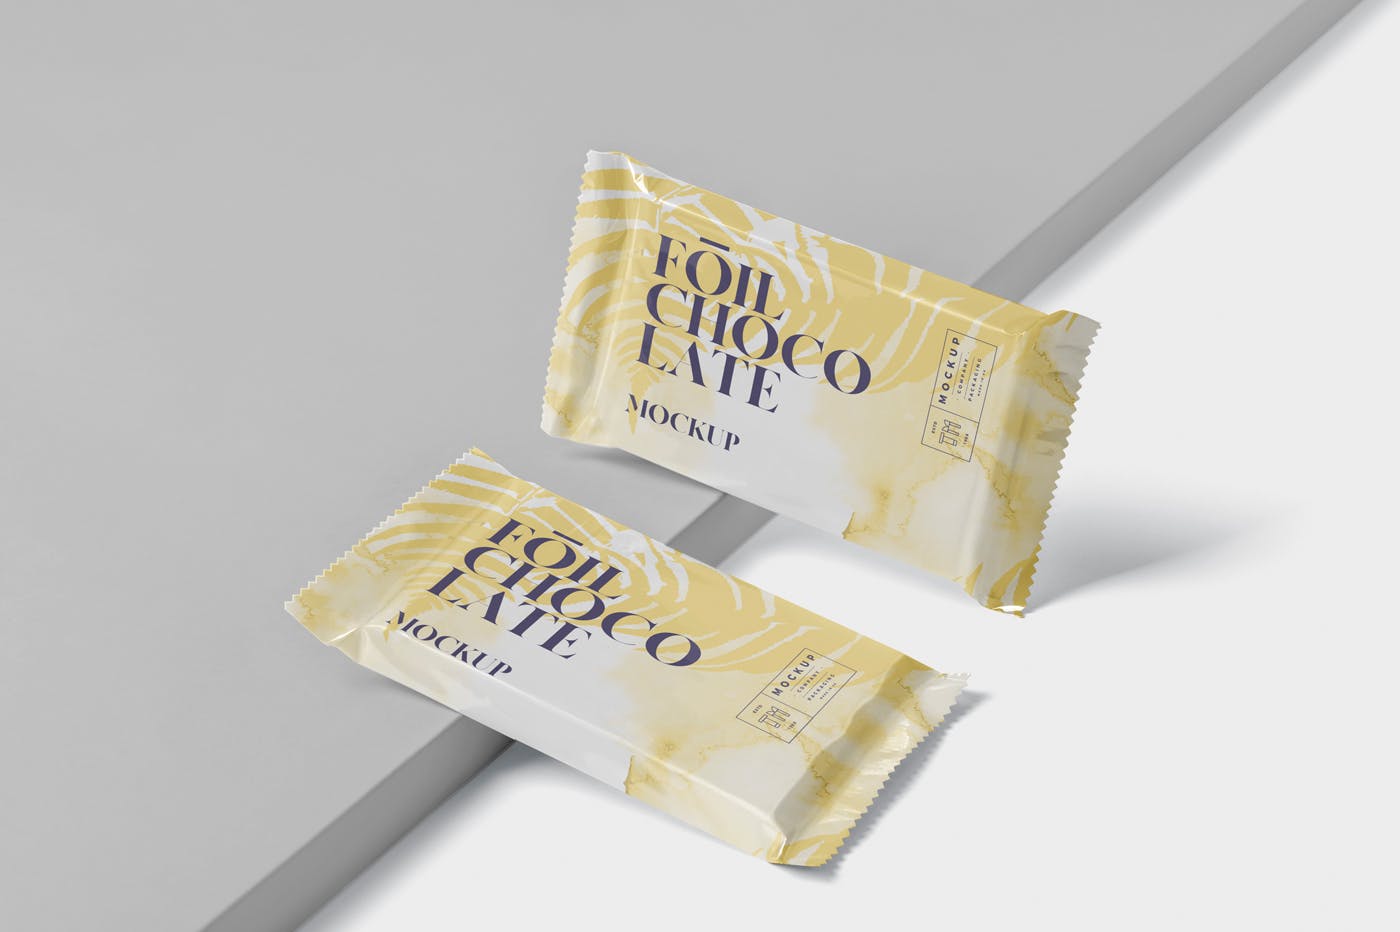 巧克力超薄铝箔纸包装设计效果图素材库精选 Foil Chocolate Packaging Mockup – Slim Size插图(3)